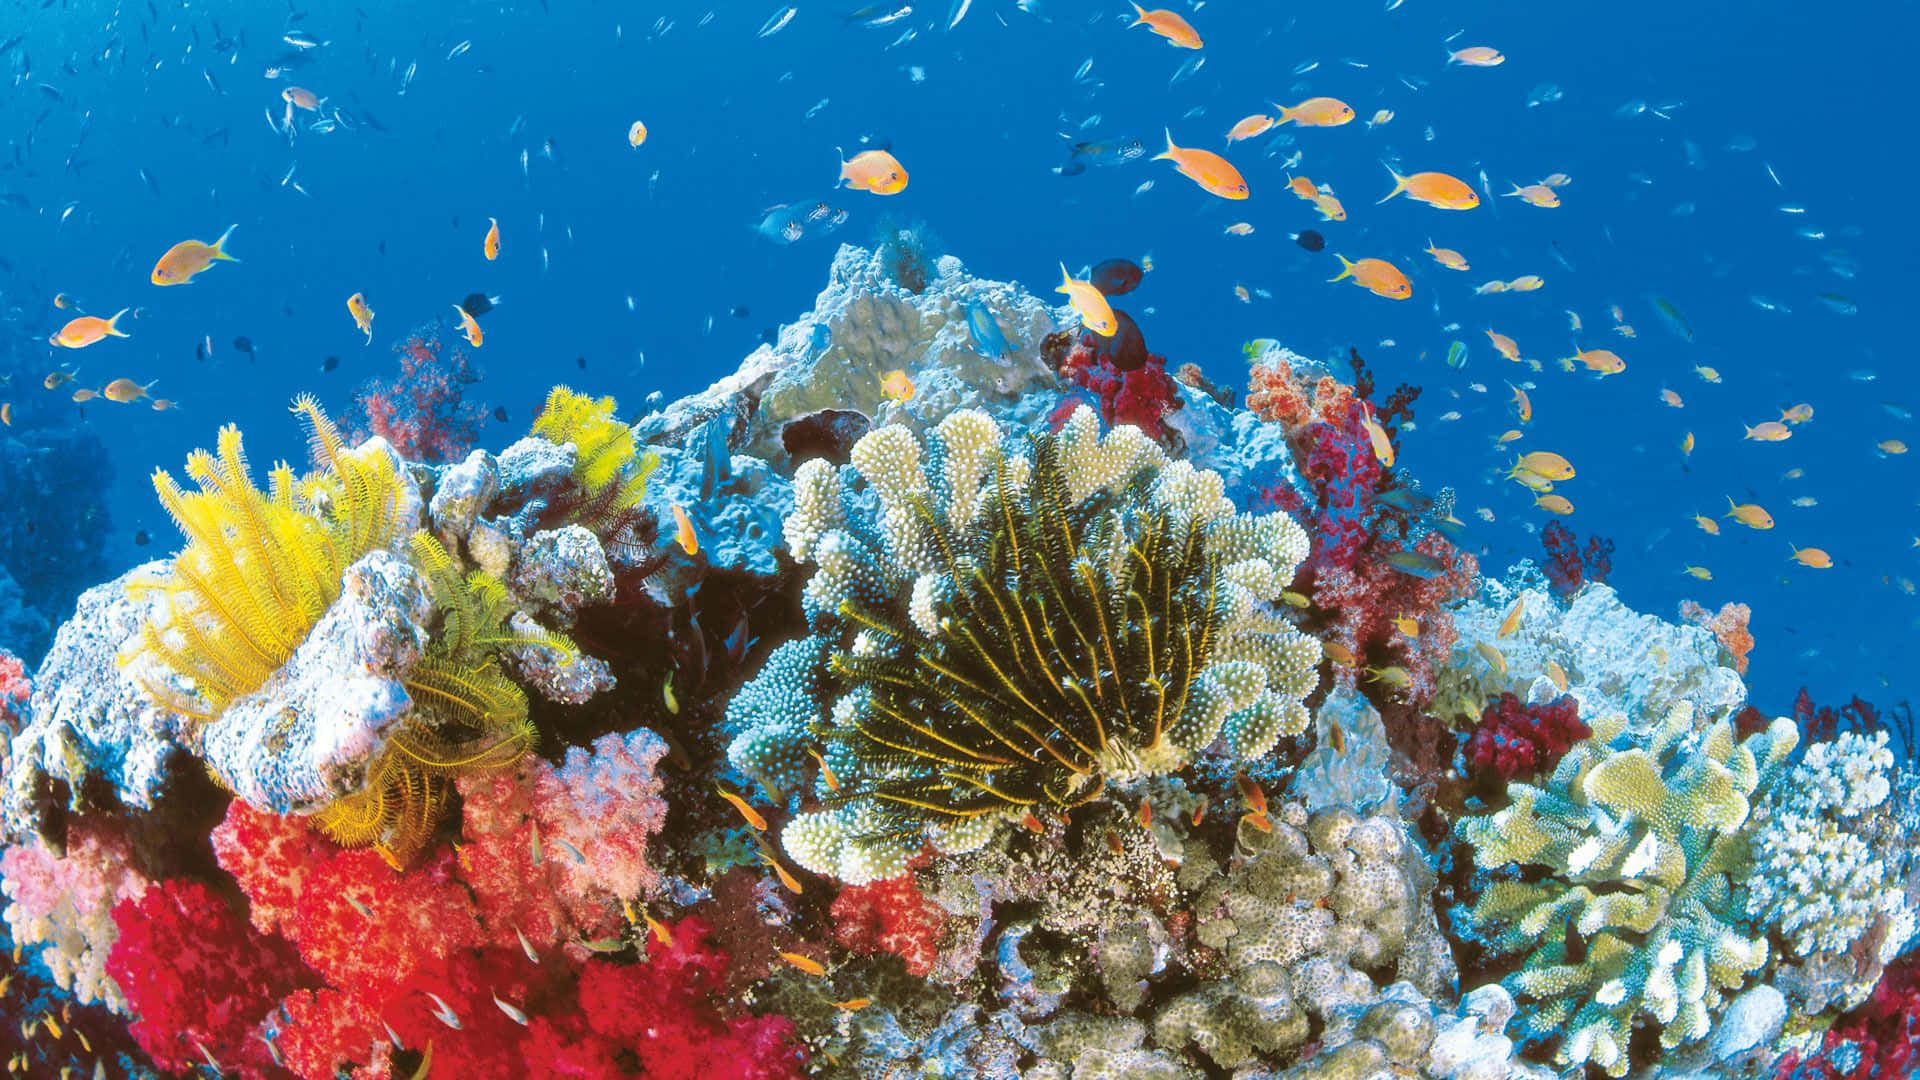 Fascinantepaisaje Submarino De Arrecifes De Coral